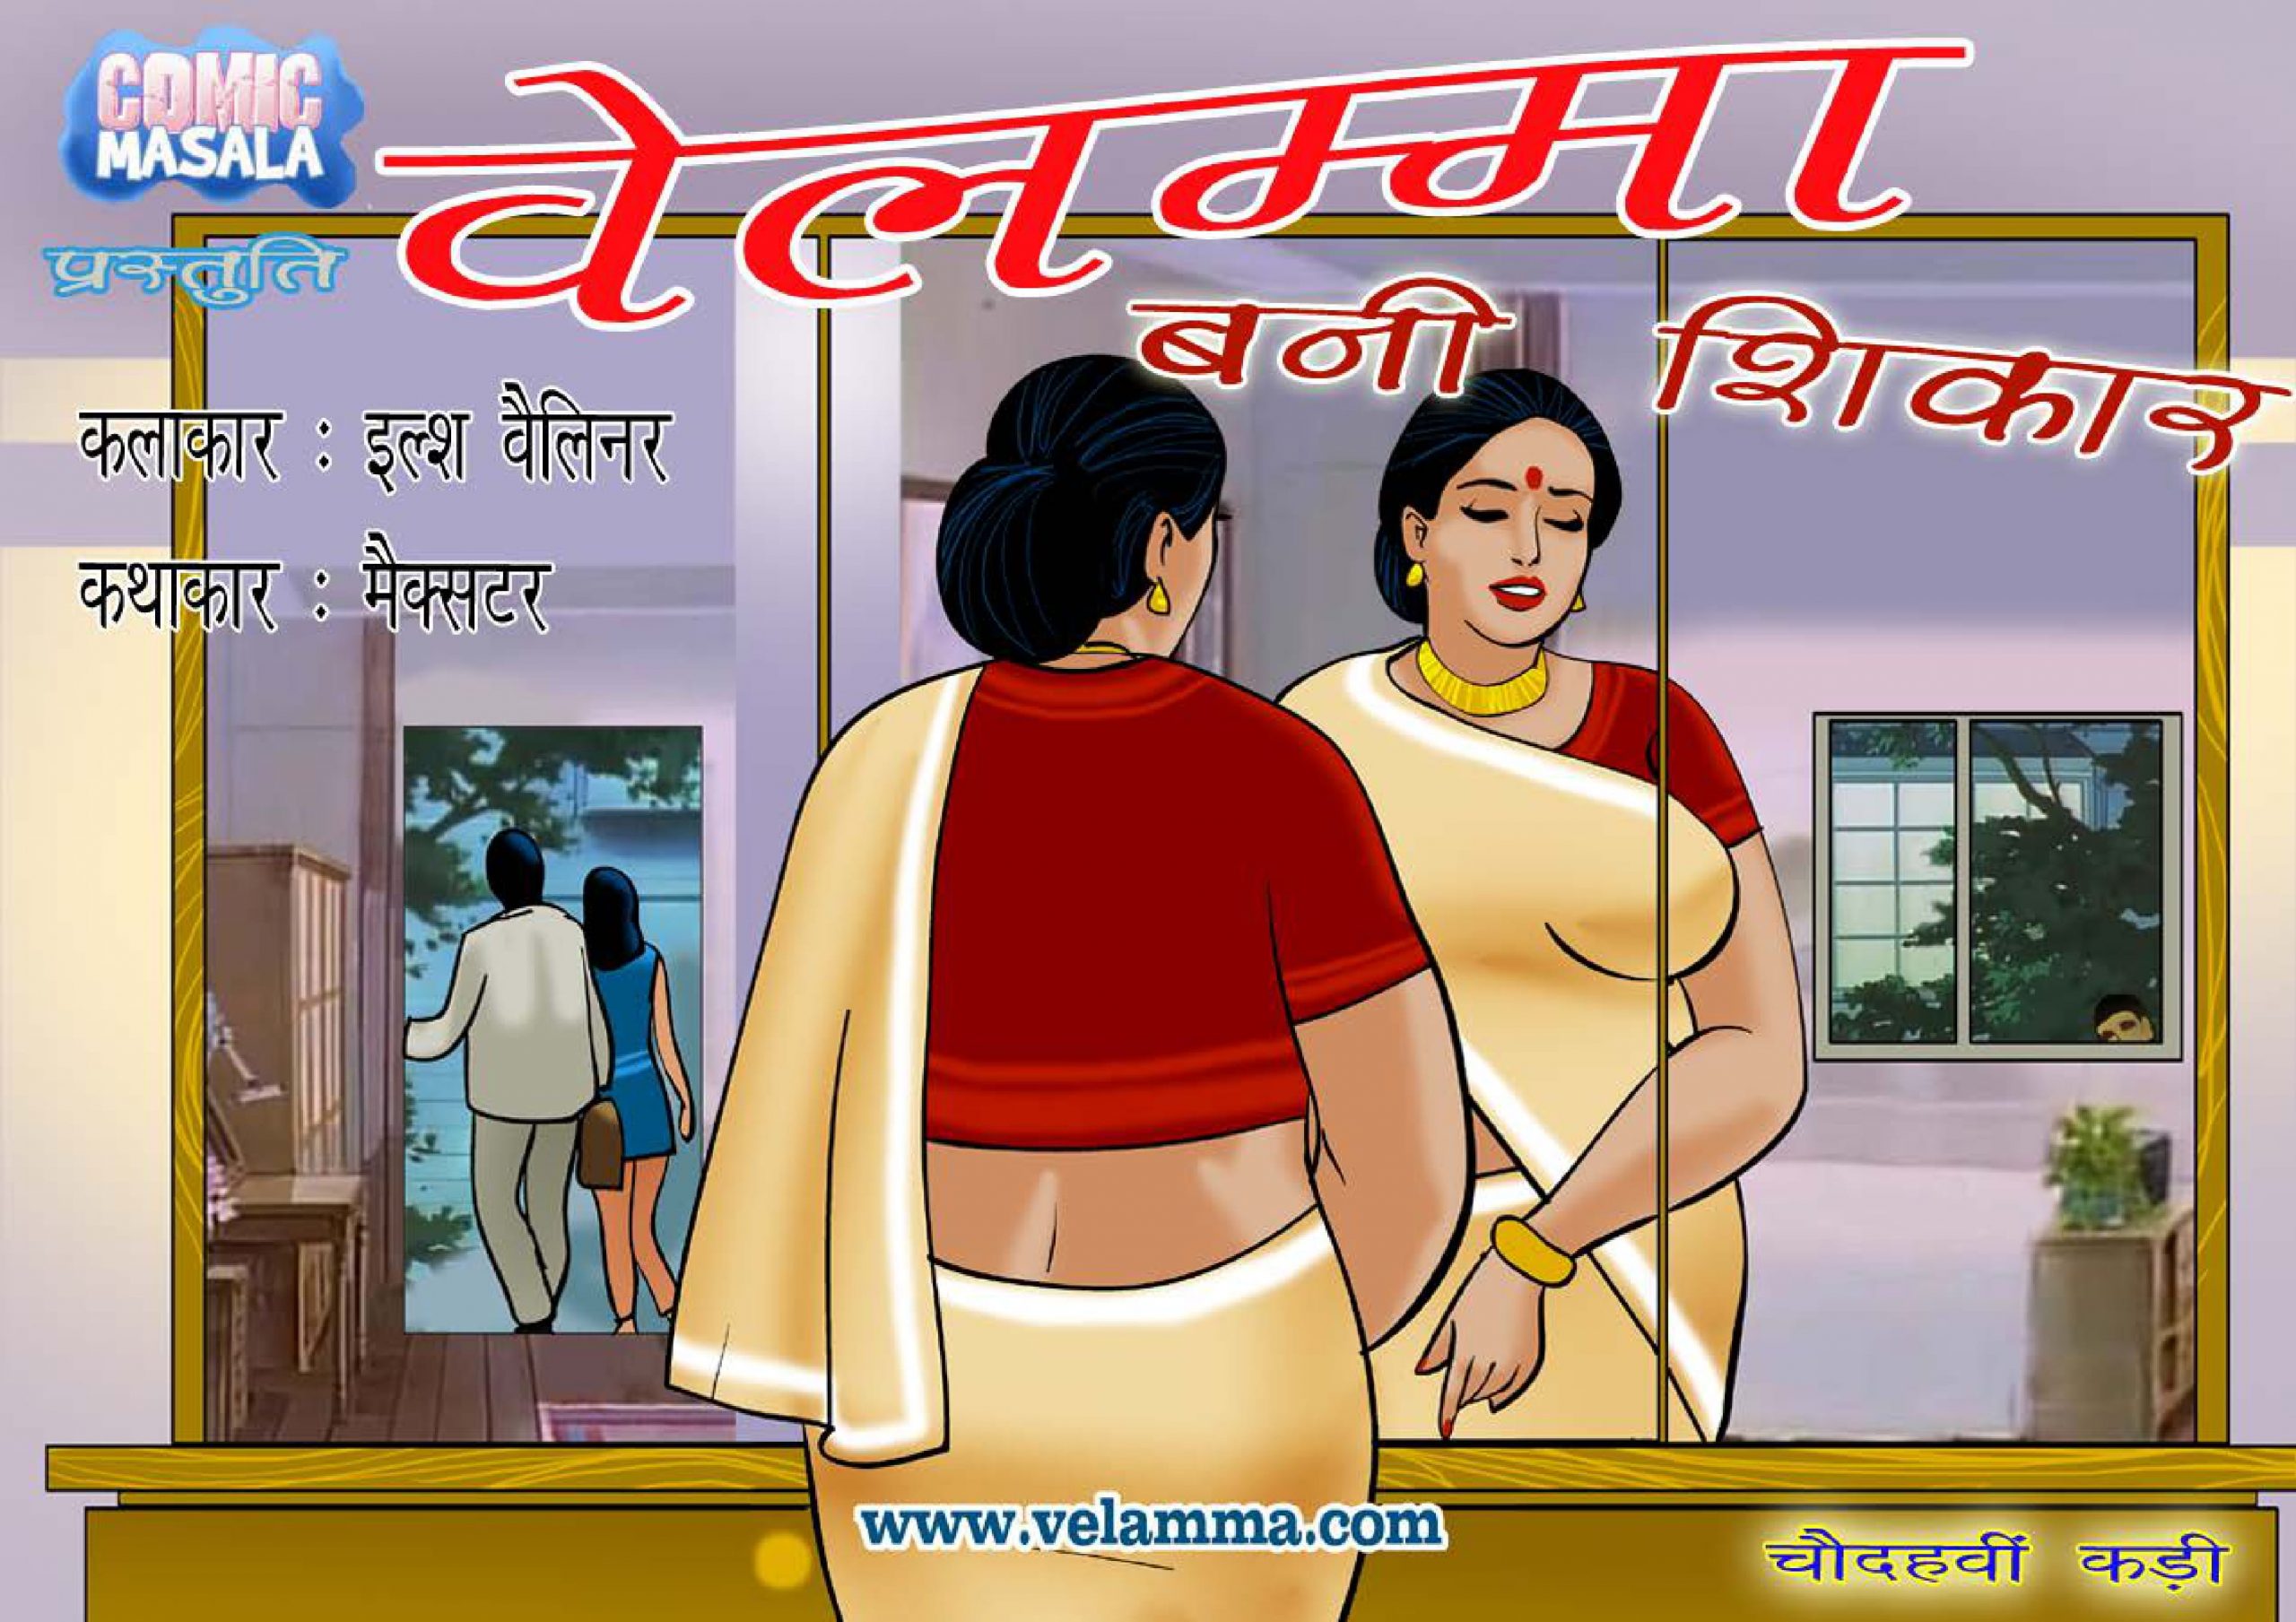 Velamma Episode 14 Hindi – Velamma bni Shikaar (वेलम्मा बनी शिकार) - 15 - FSIComics